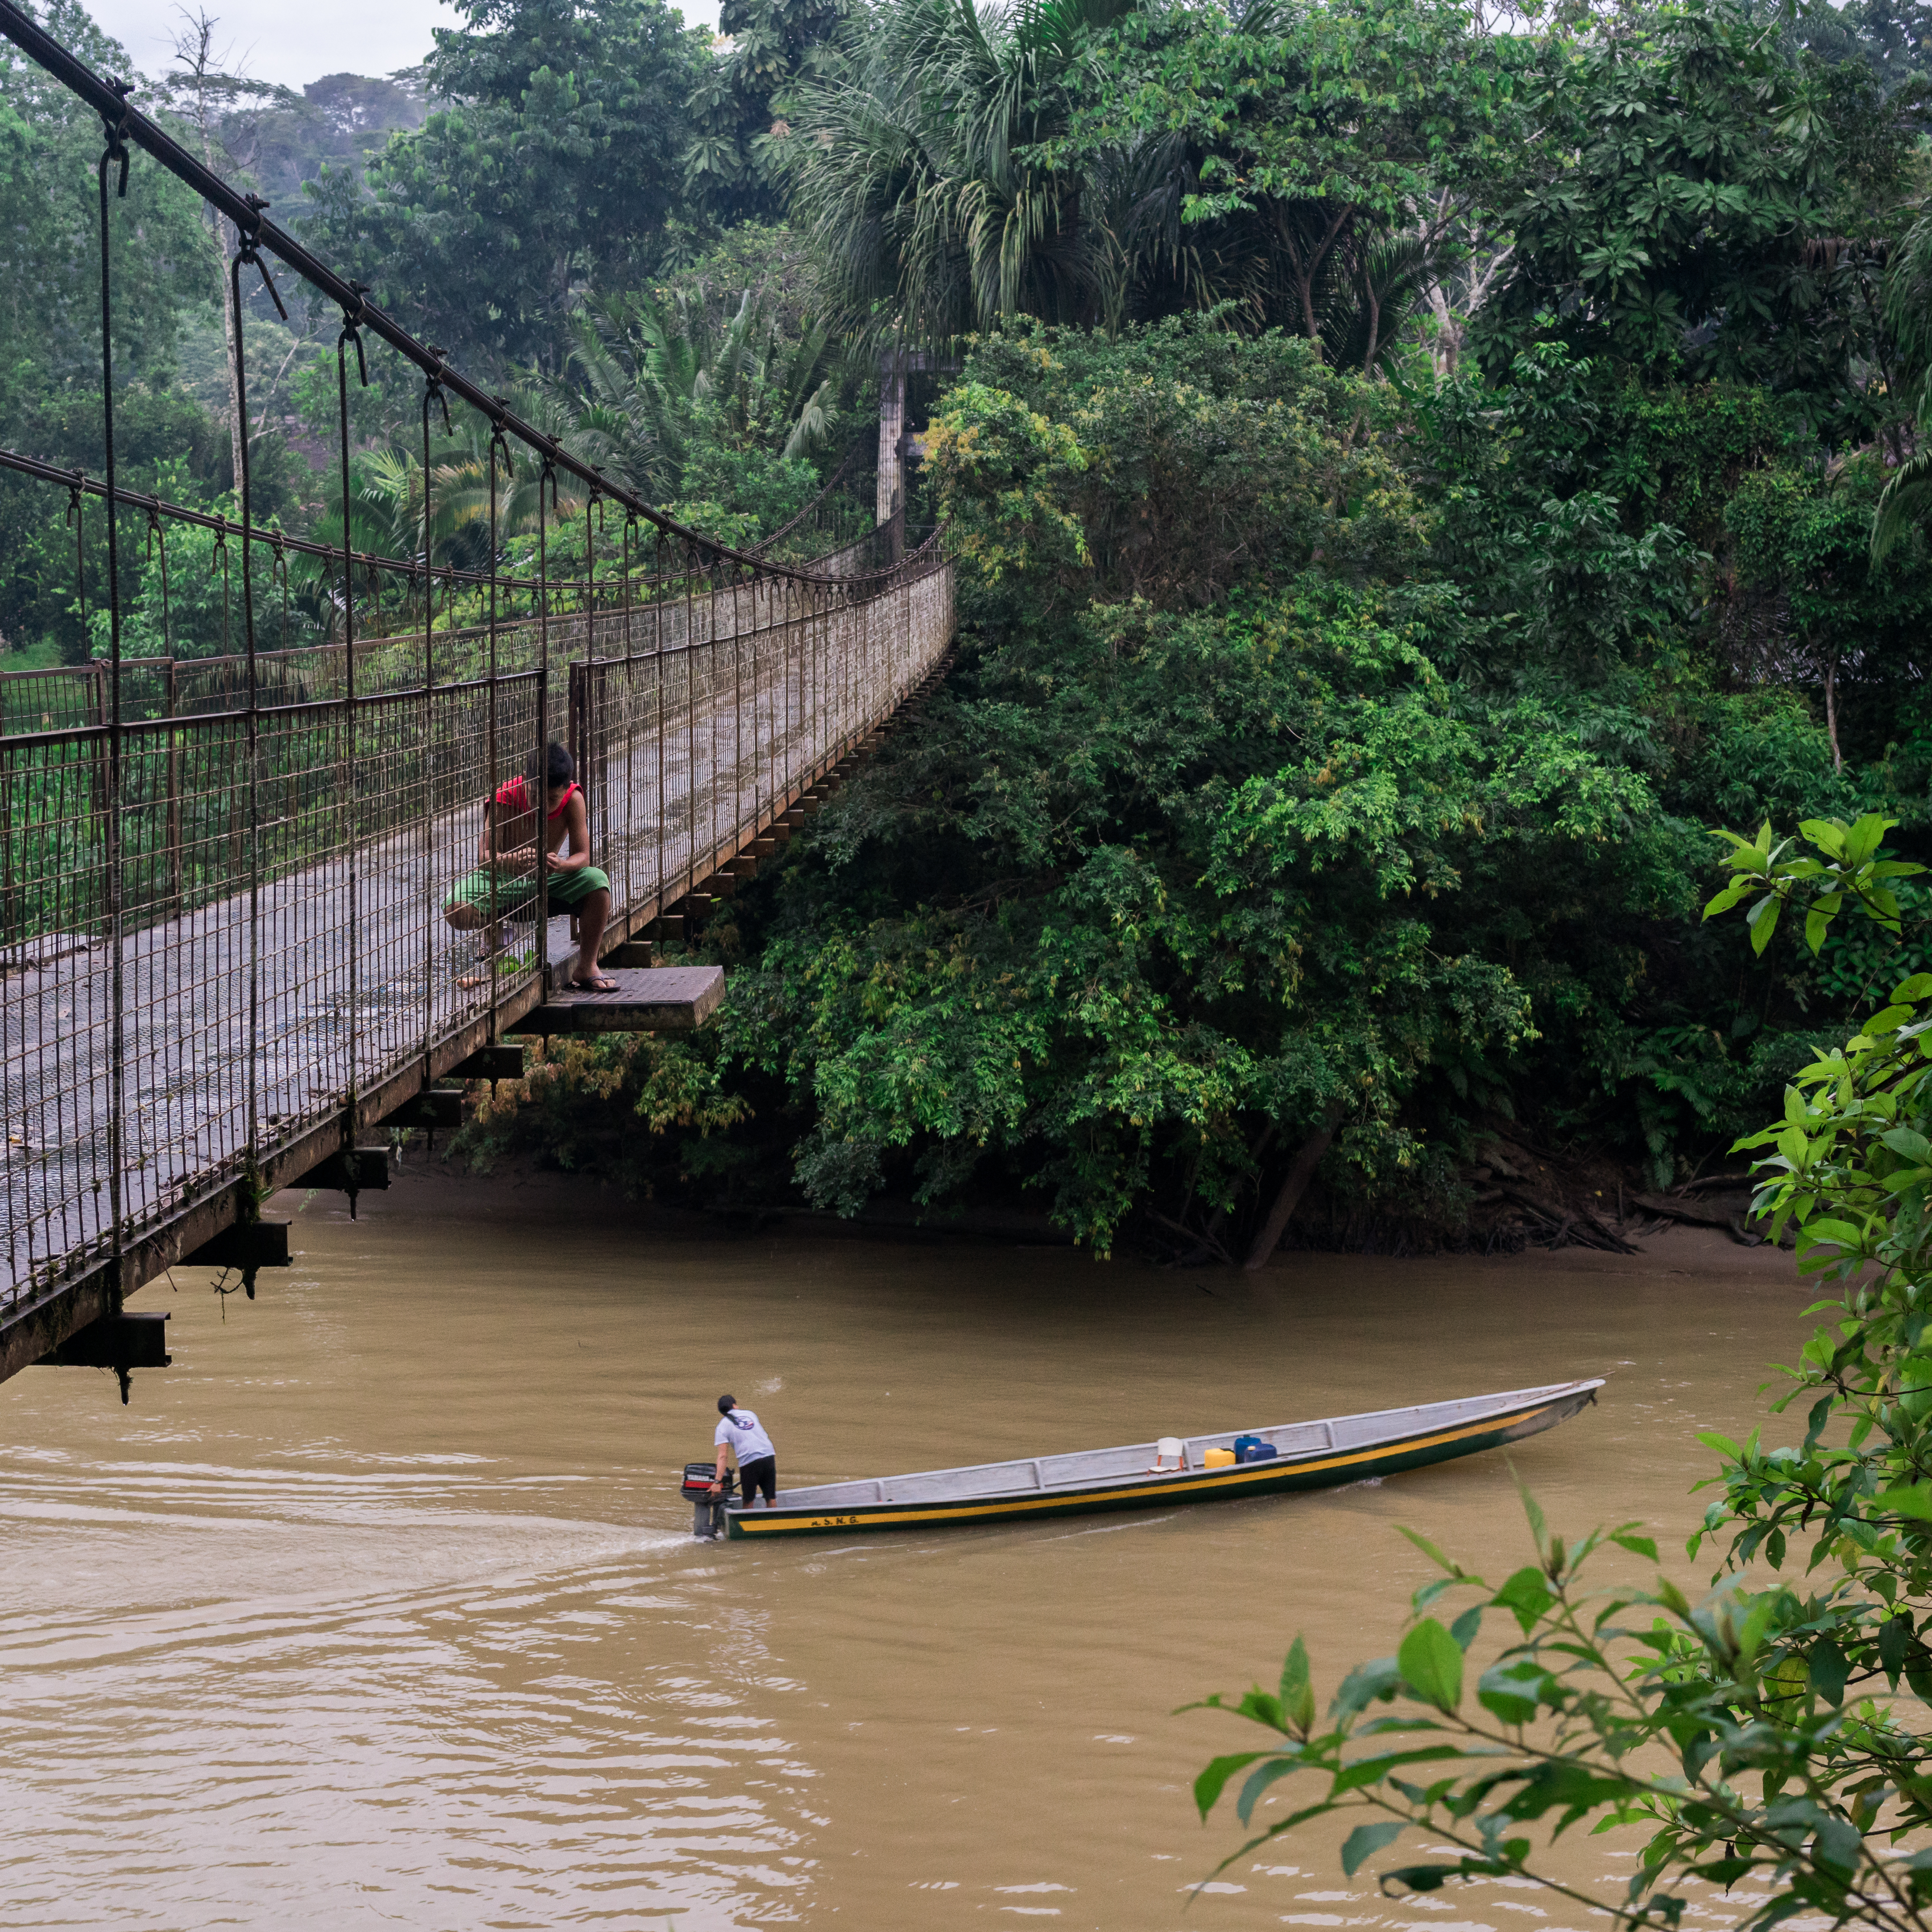 EPISODE 5 : THE AMAZONIAN AMERINDIANS AGAINST OIL EXPLOITATION